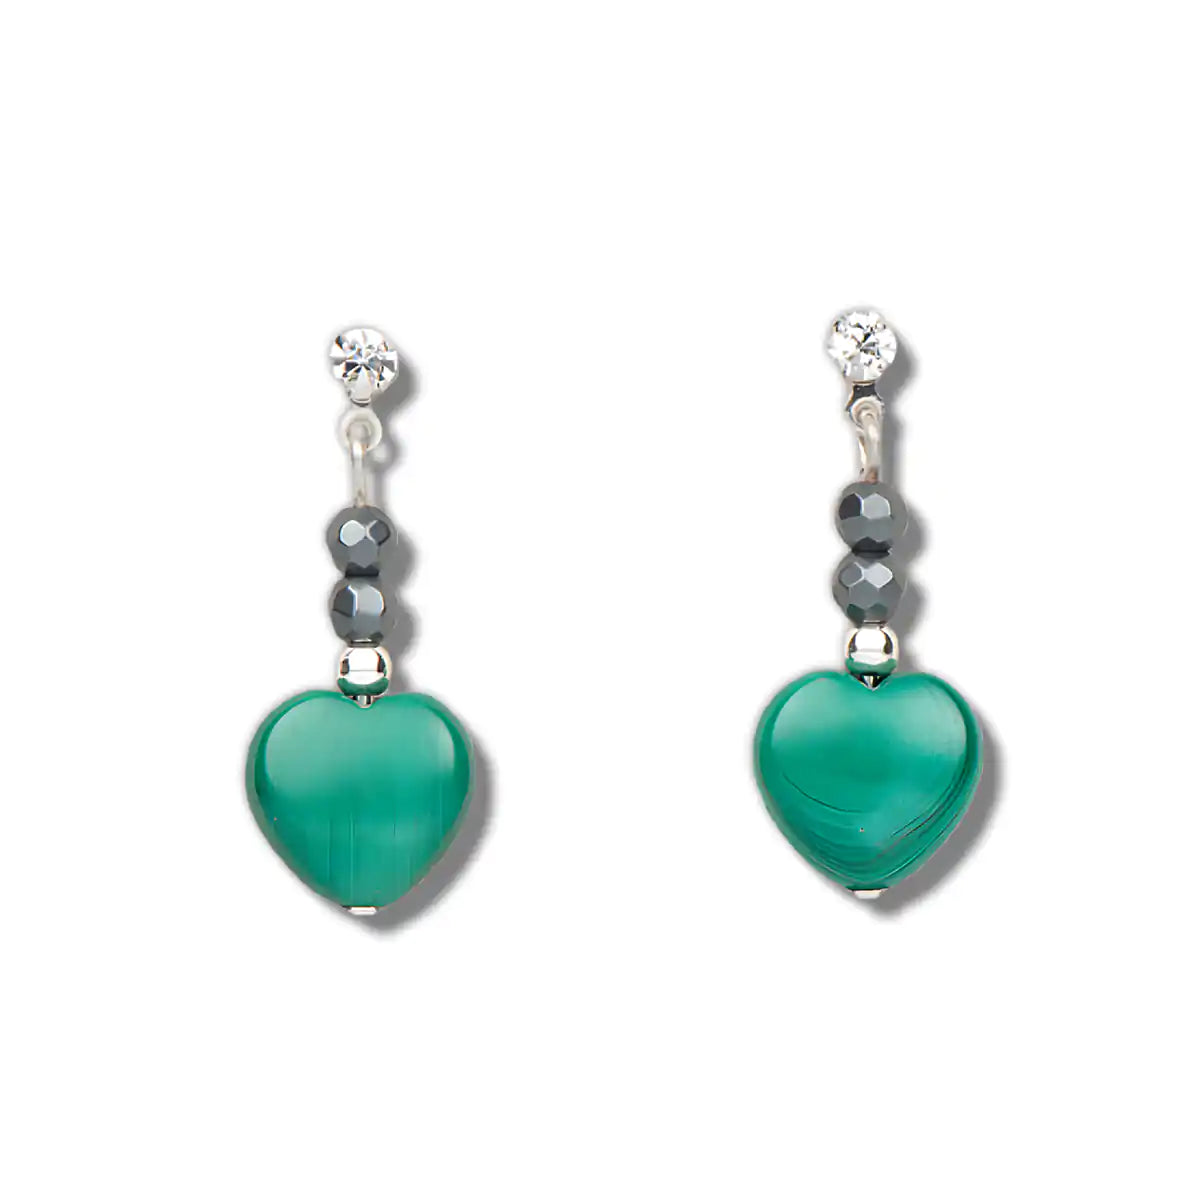 Hematite malachite hearts earrings